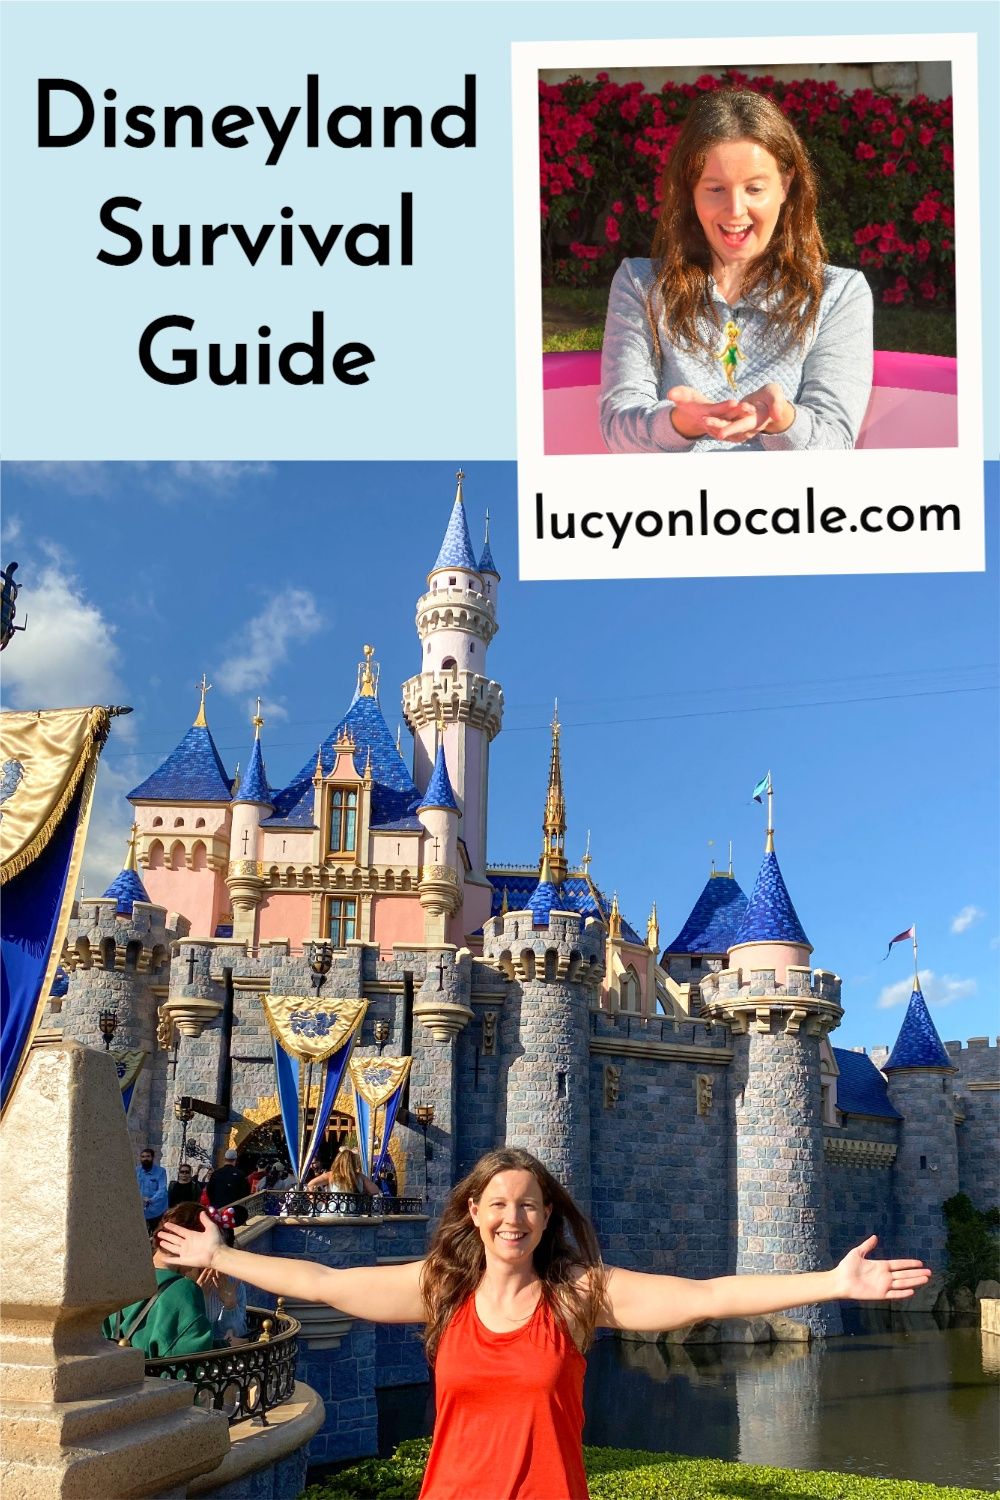 Disneyland survival guide